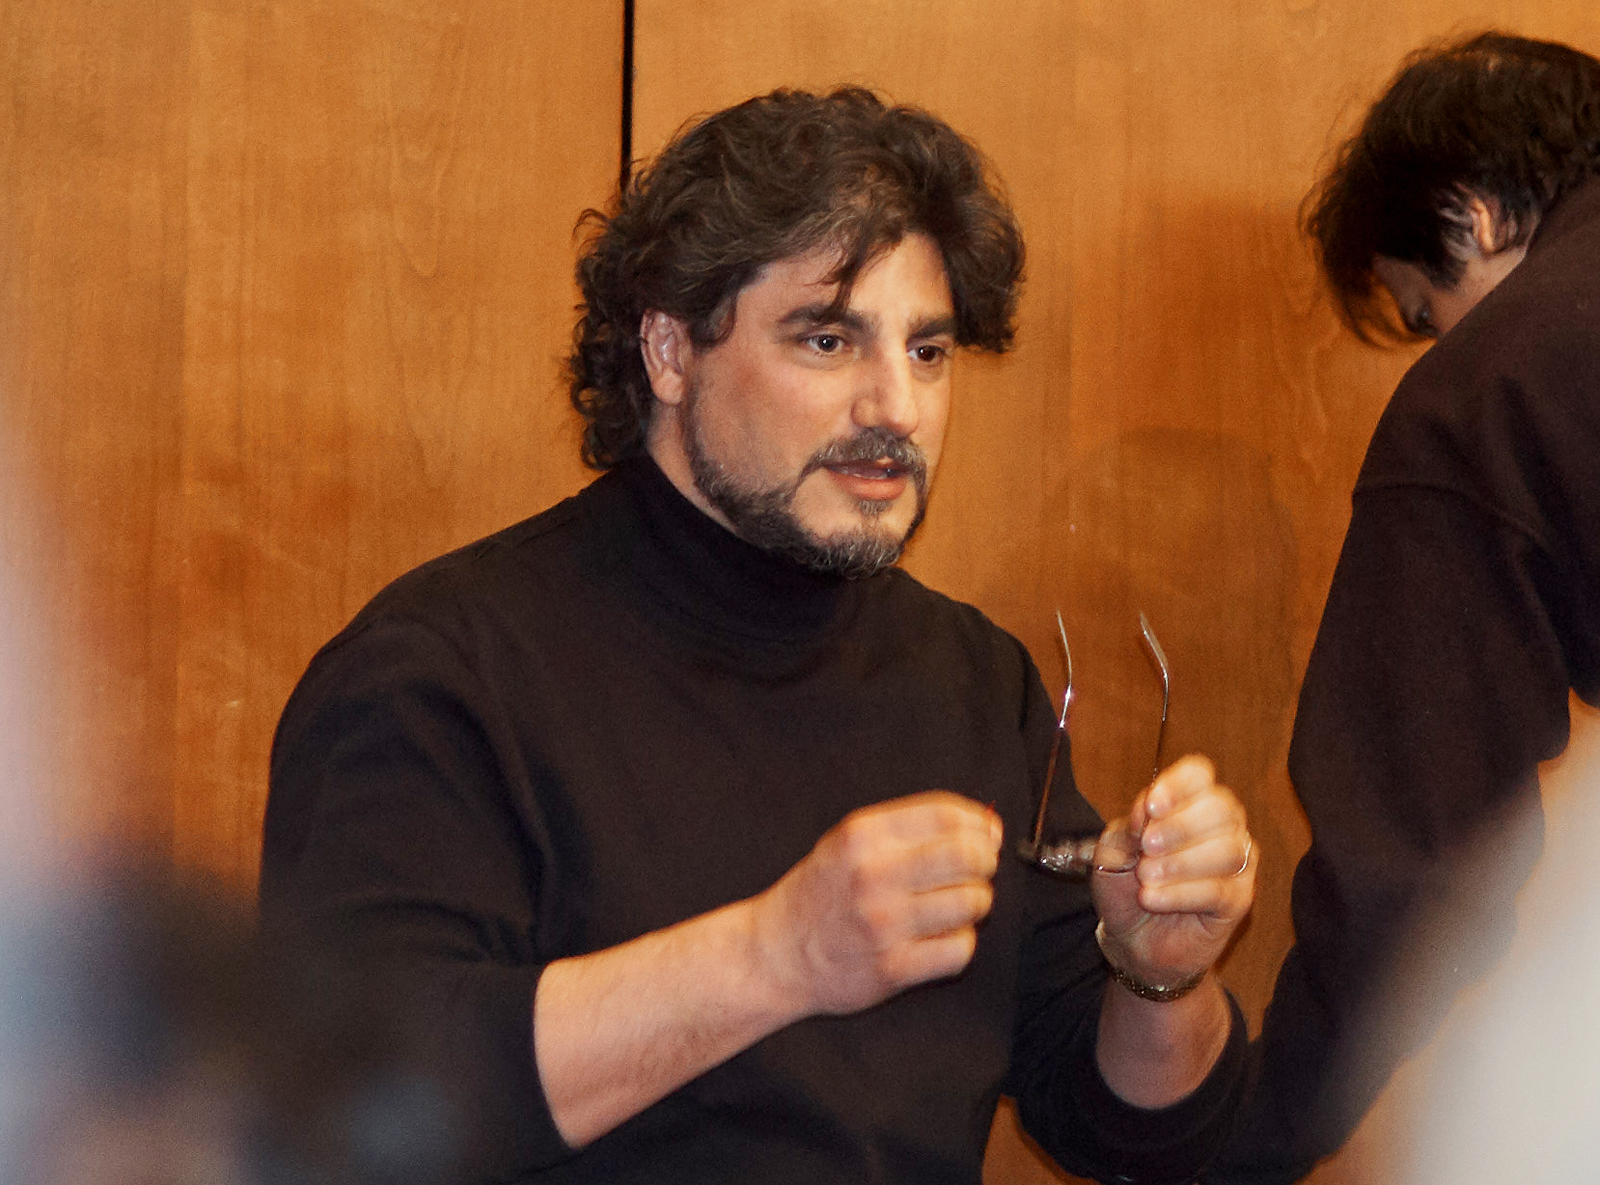 Jos Cura at Artist's Talk for Samson et Dalila at the Met, 2005.